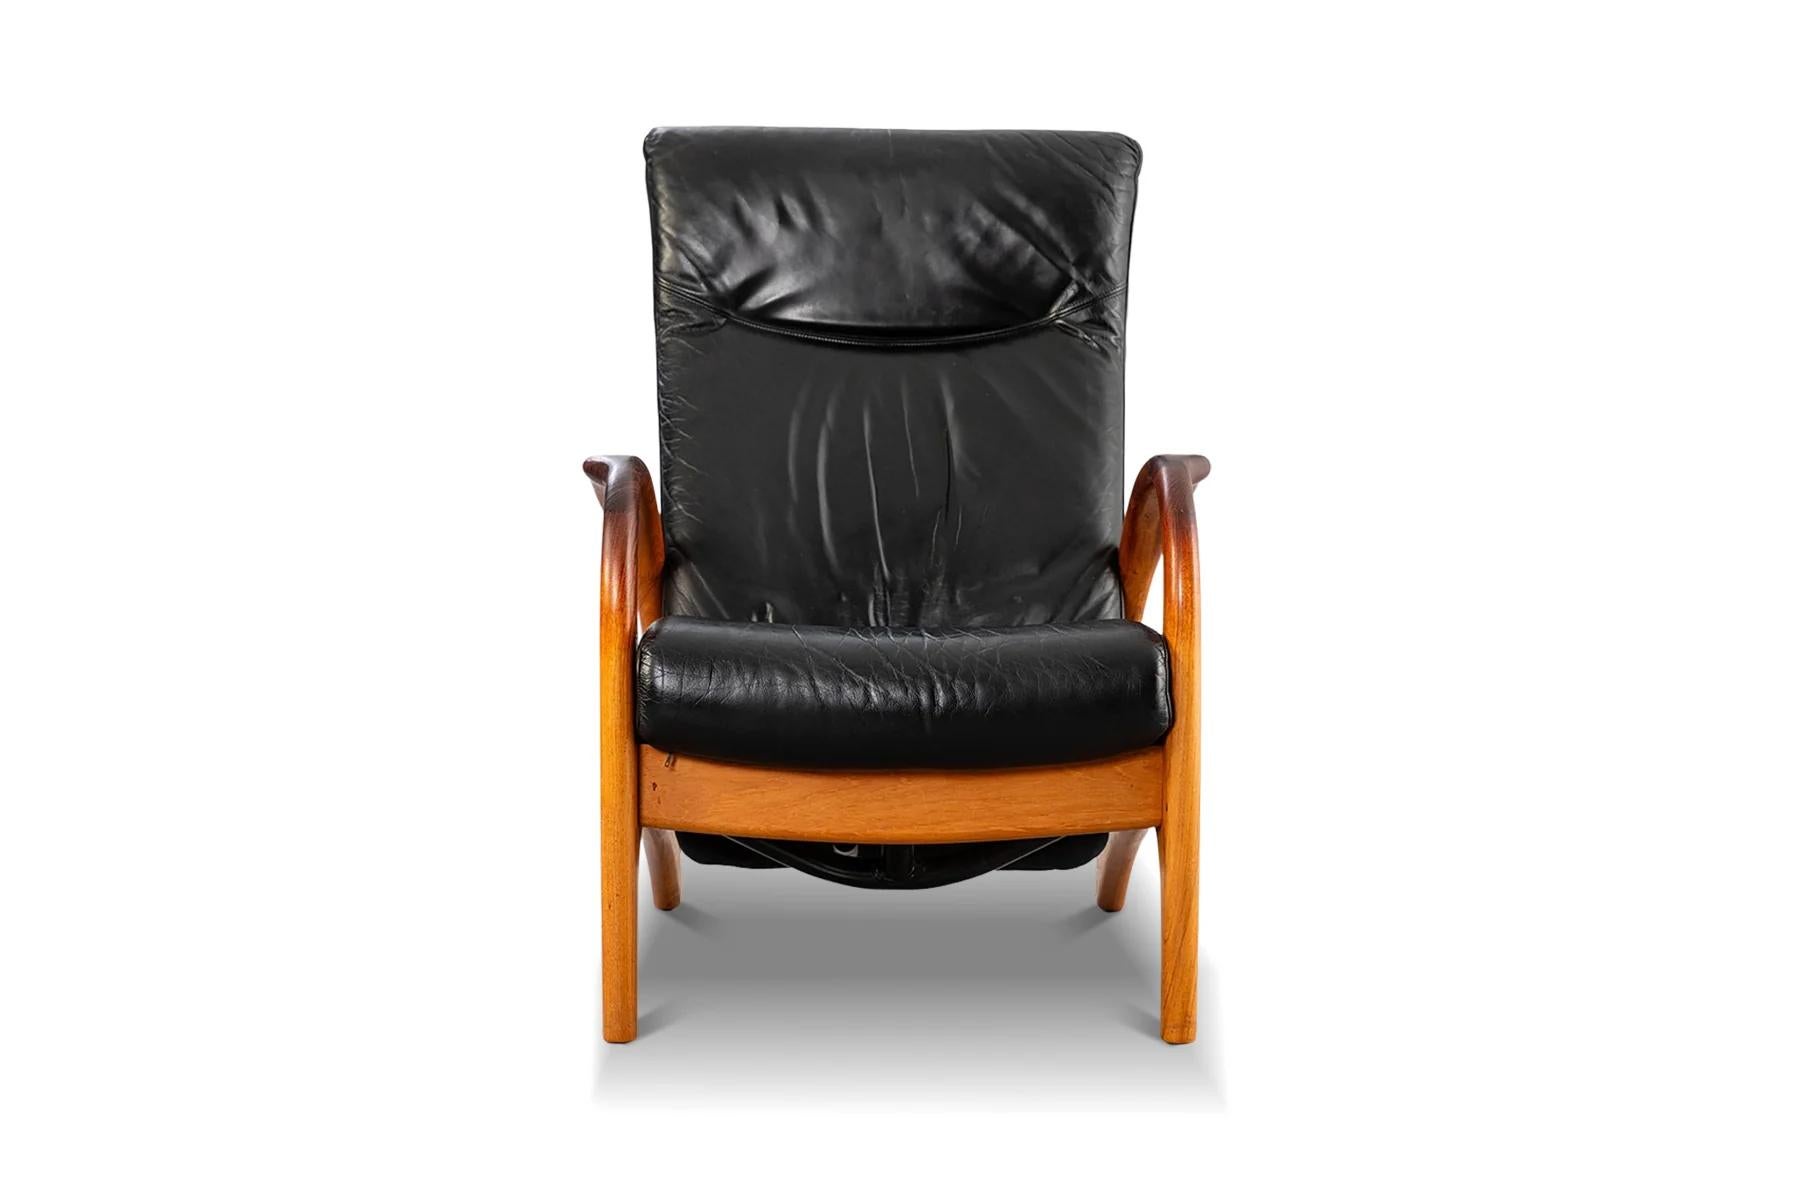 20th Century Organic modern reclining teak + leather lounge chair with ottoman